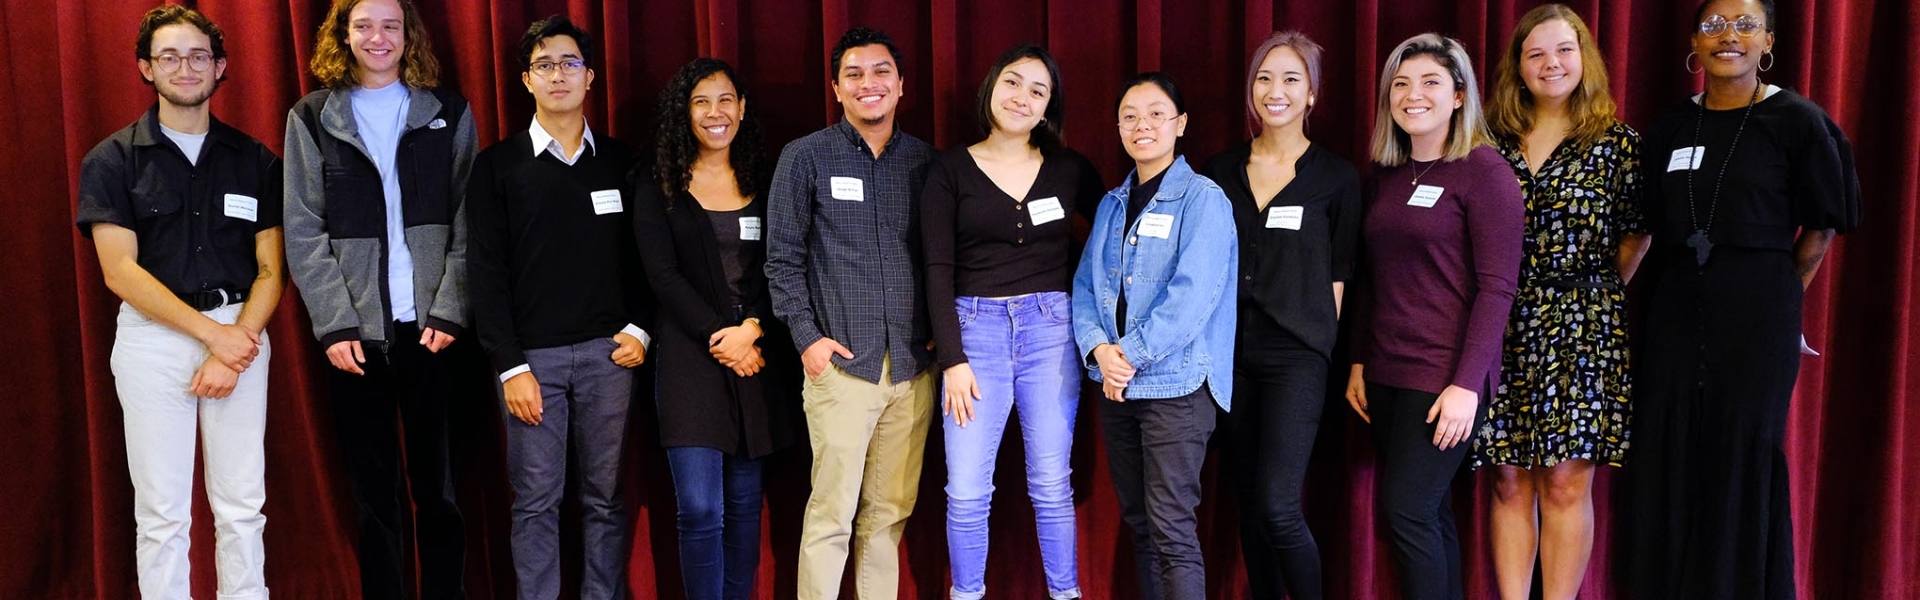 The 2019 cohort of undergraduate Marcus Research Awards winners